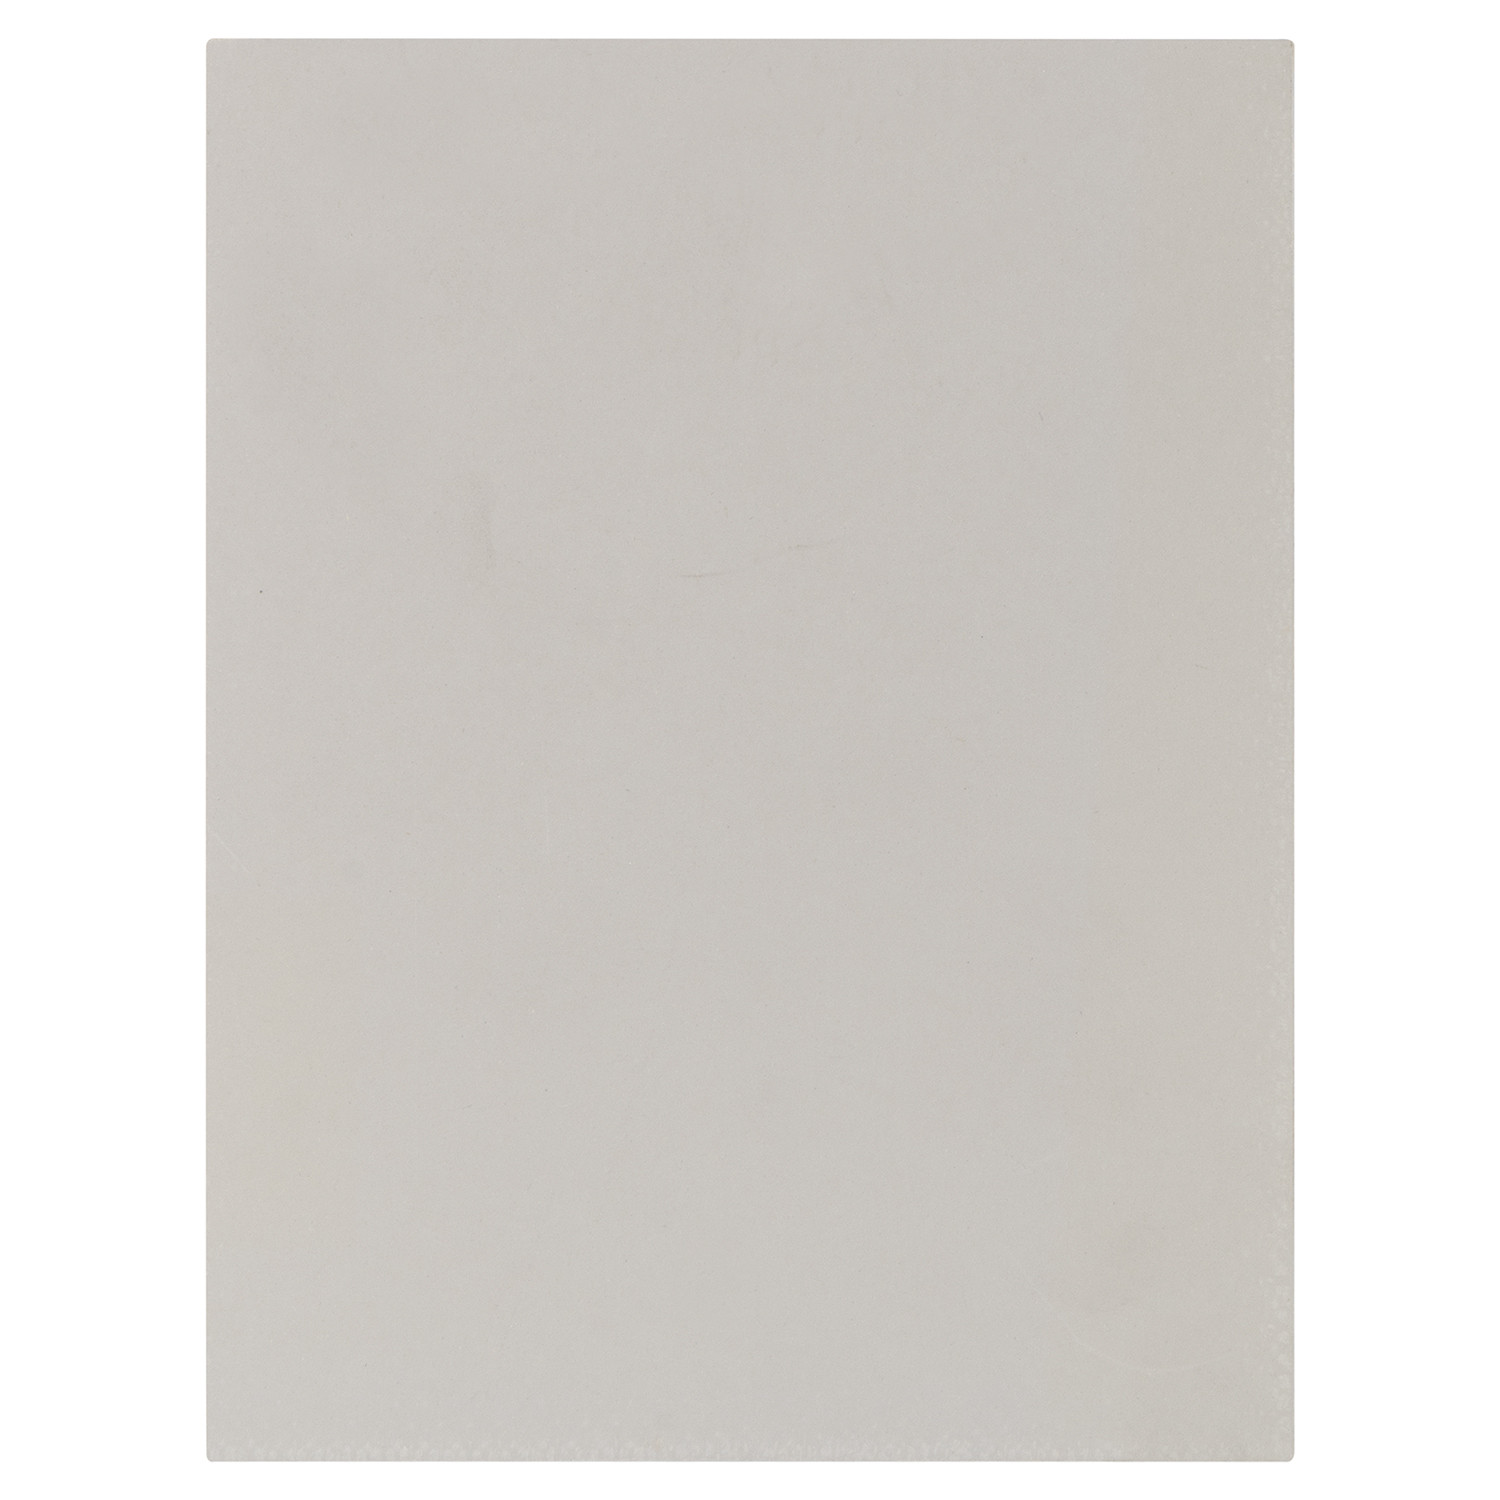 Essdee Lino Tile Sheets - 20.3 x 15.2cm Image 1